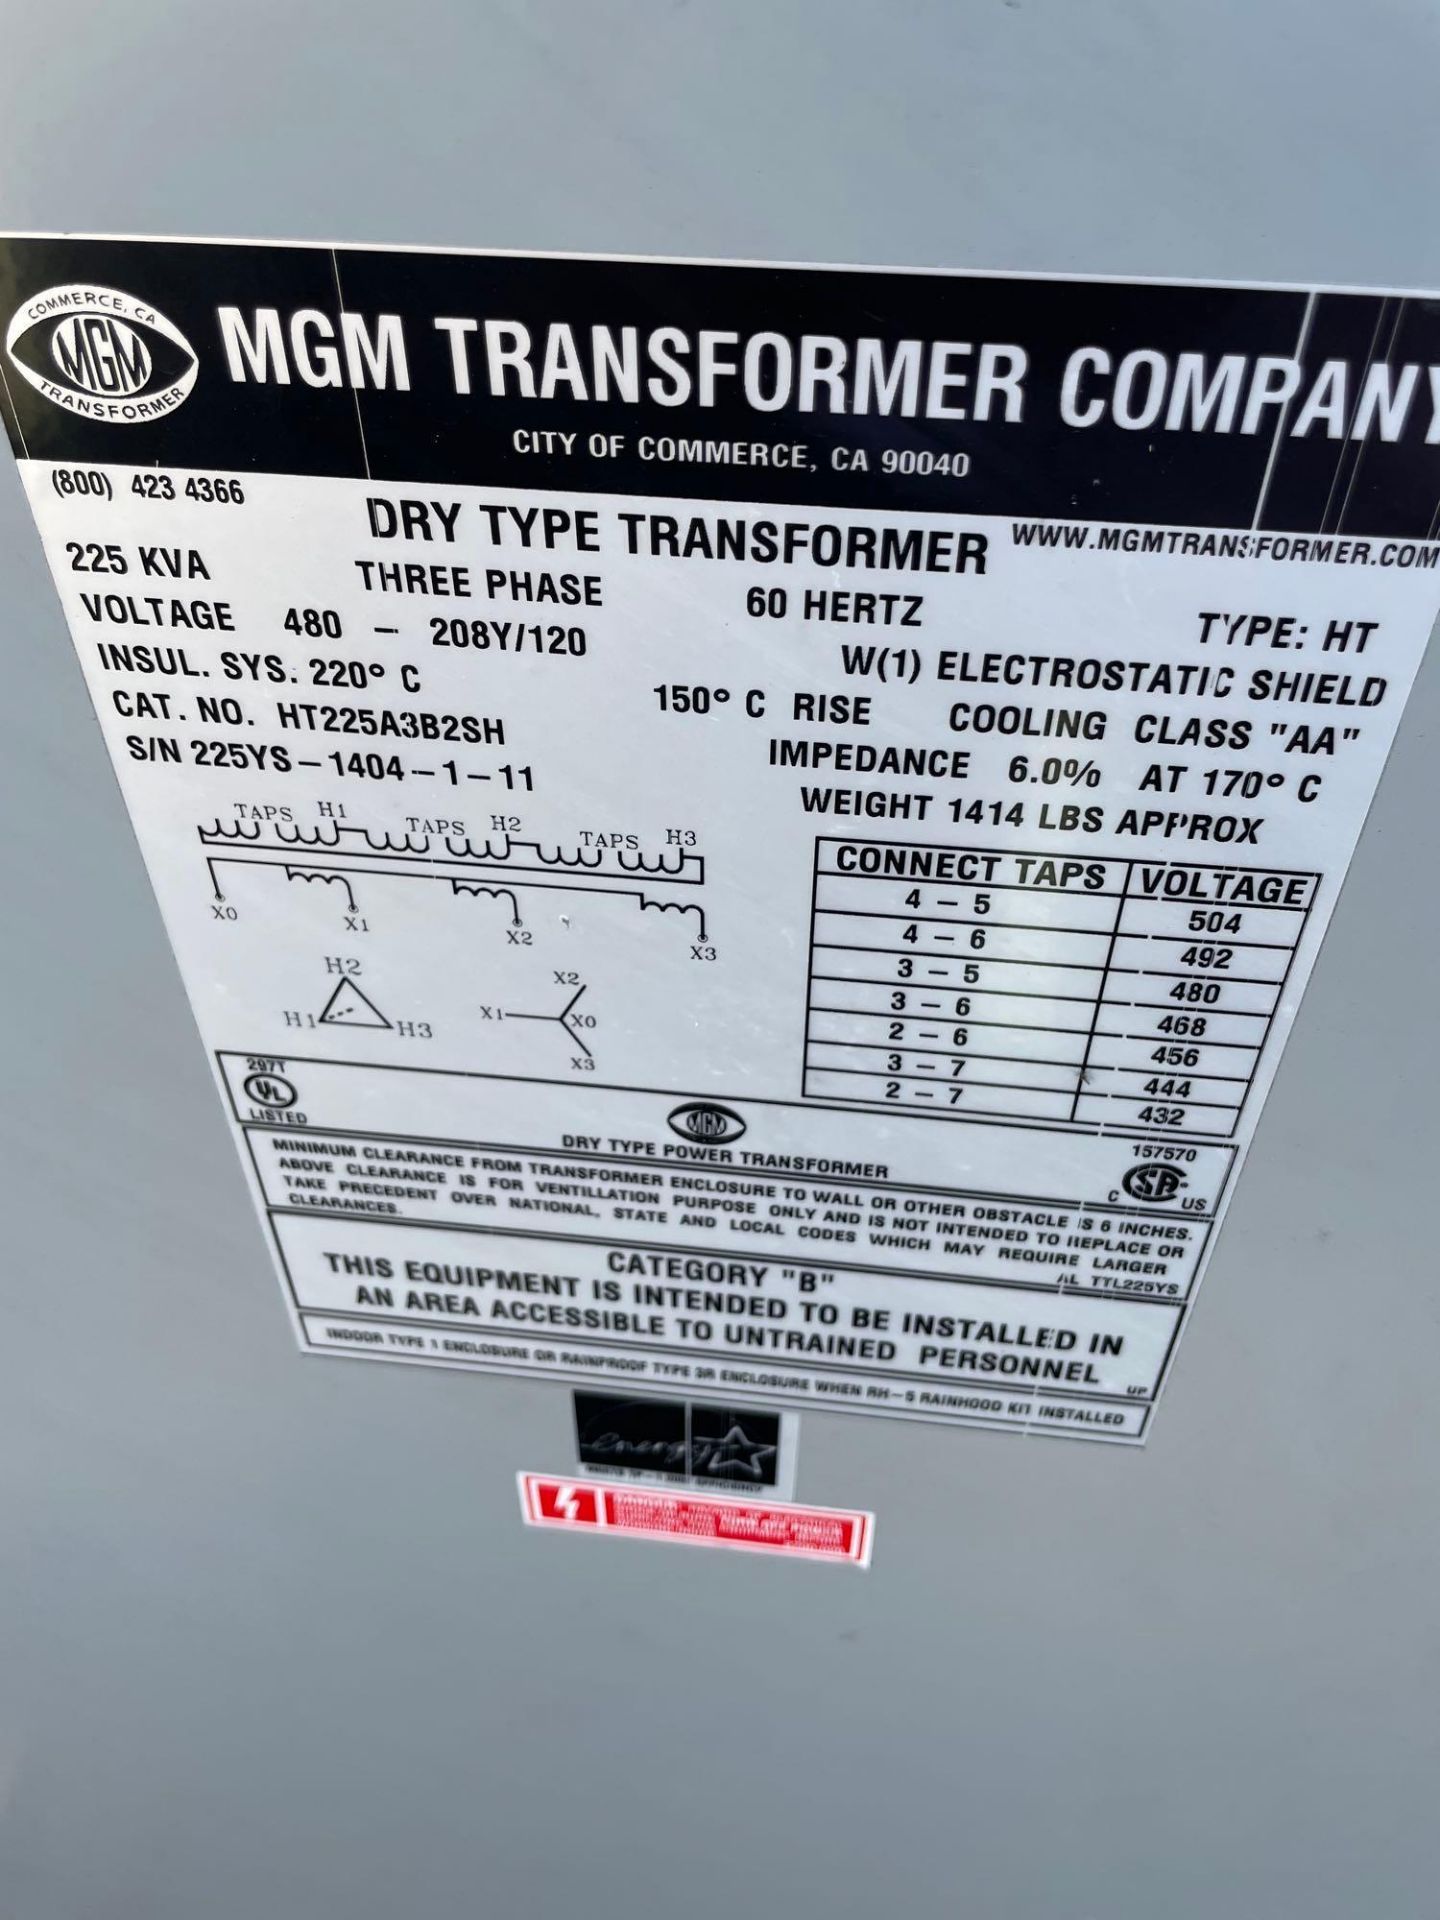 MGM Transformer, 225 KVA, 3 Phase, 480V, Category B - Image 3 of 3